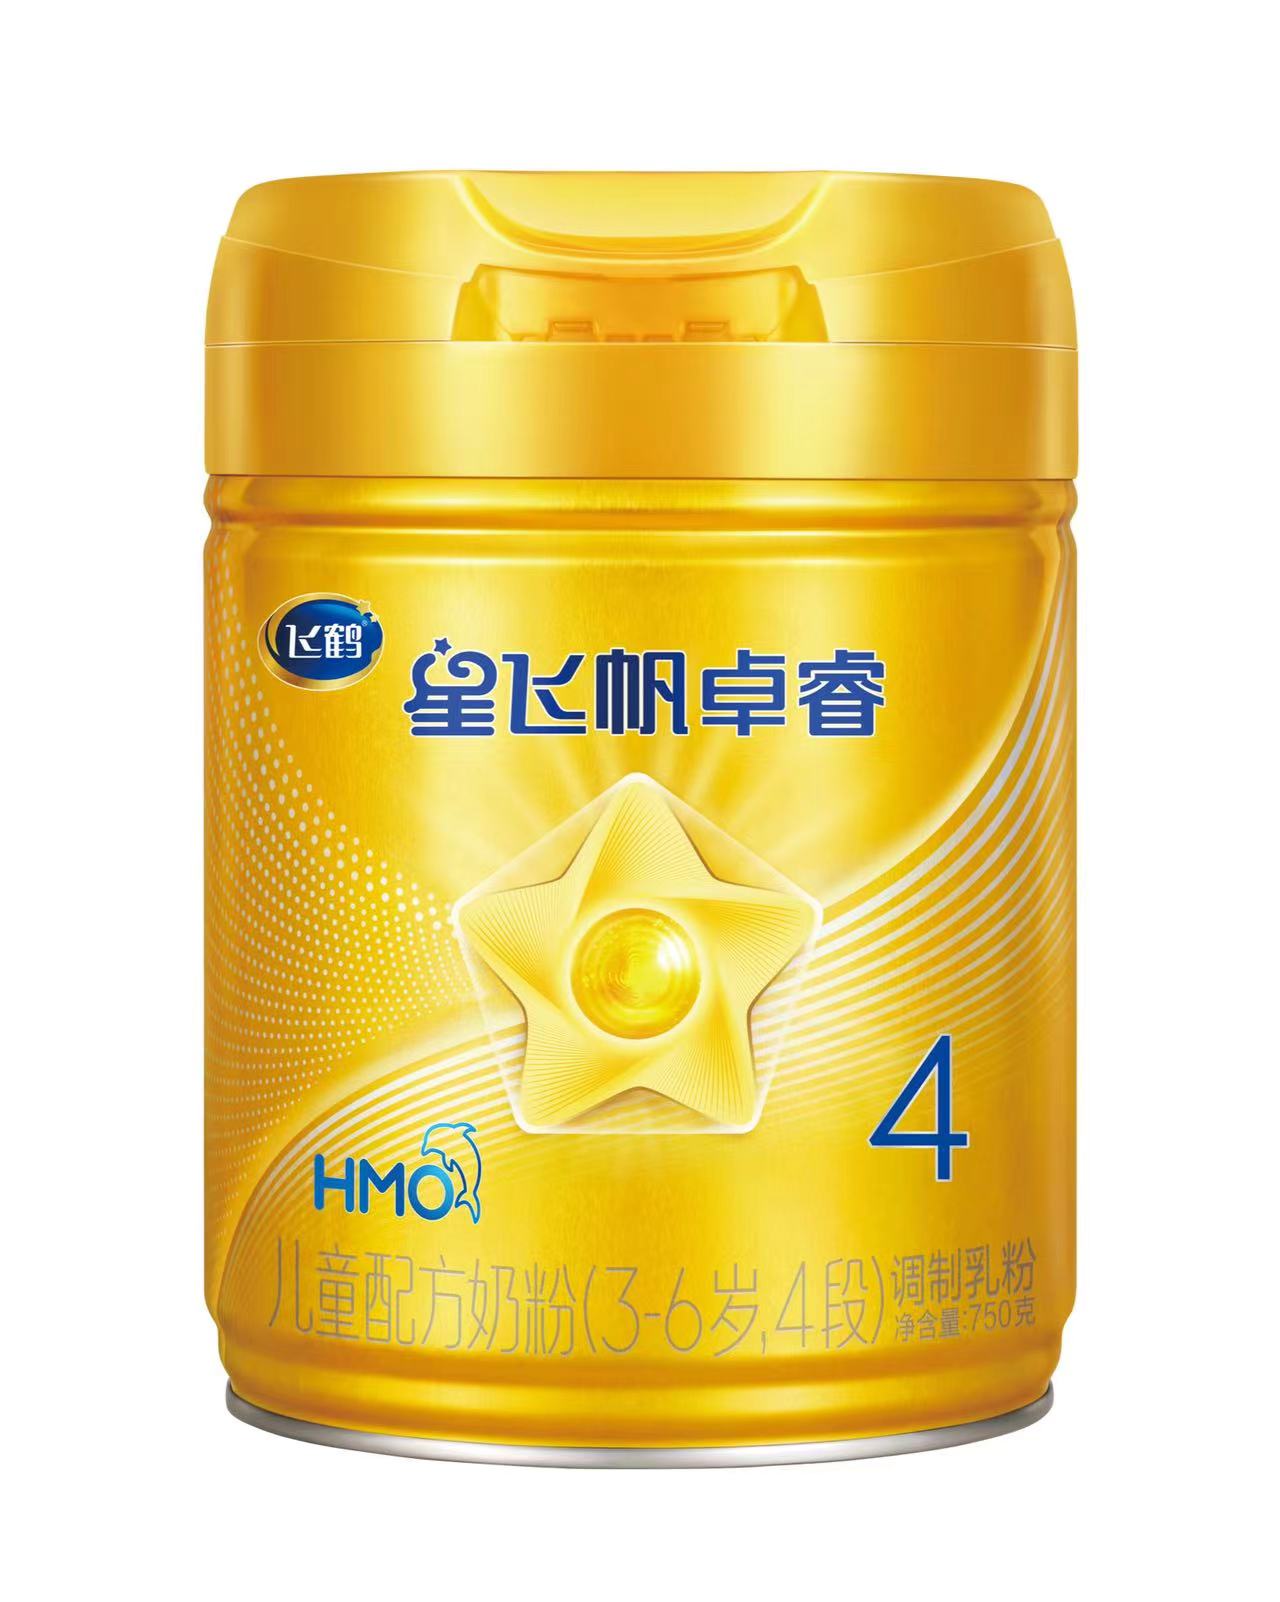 HMO正式获批，飞鹤率先推出国内首款HMO奶粉